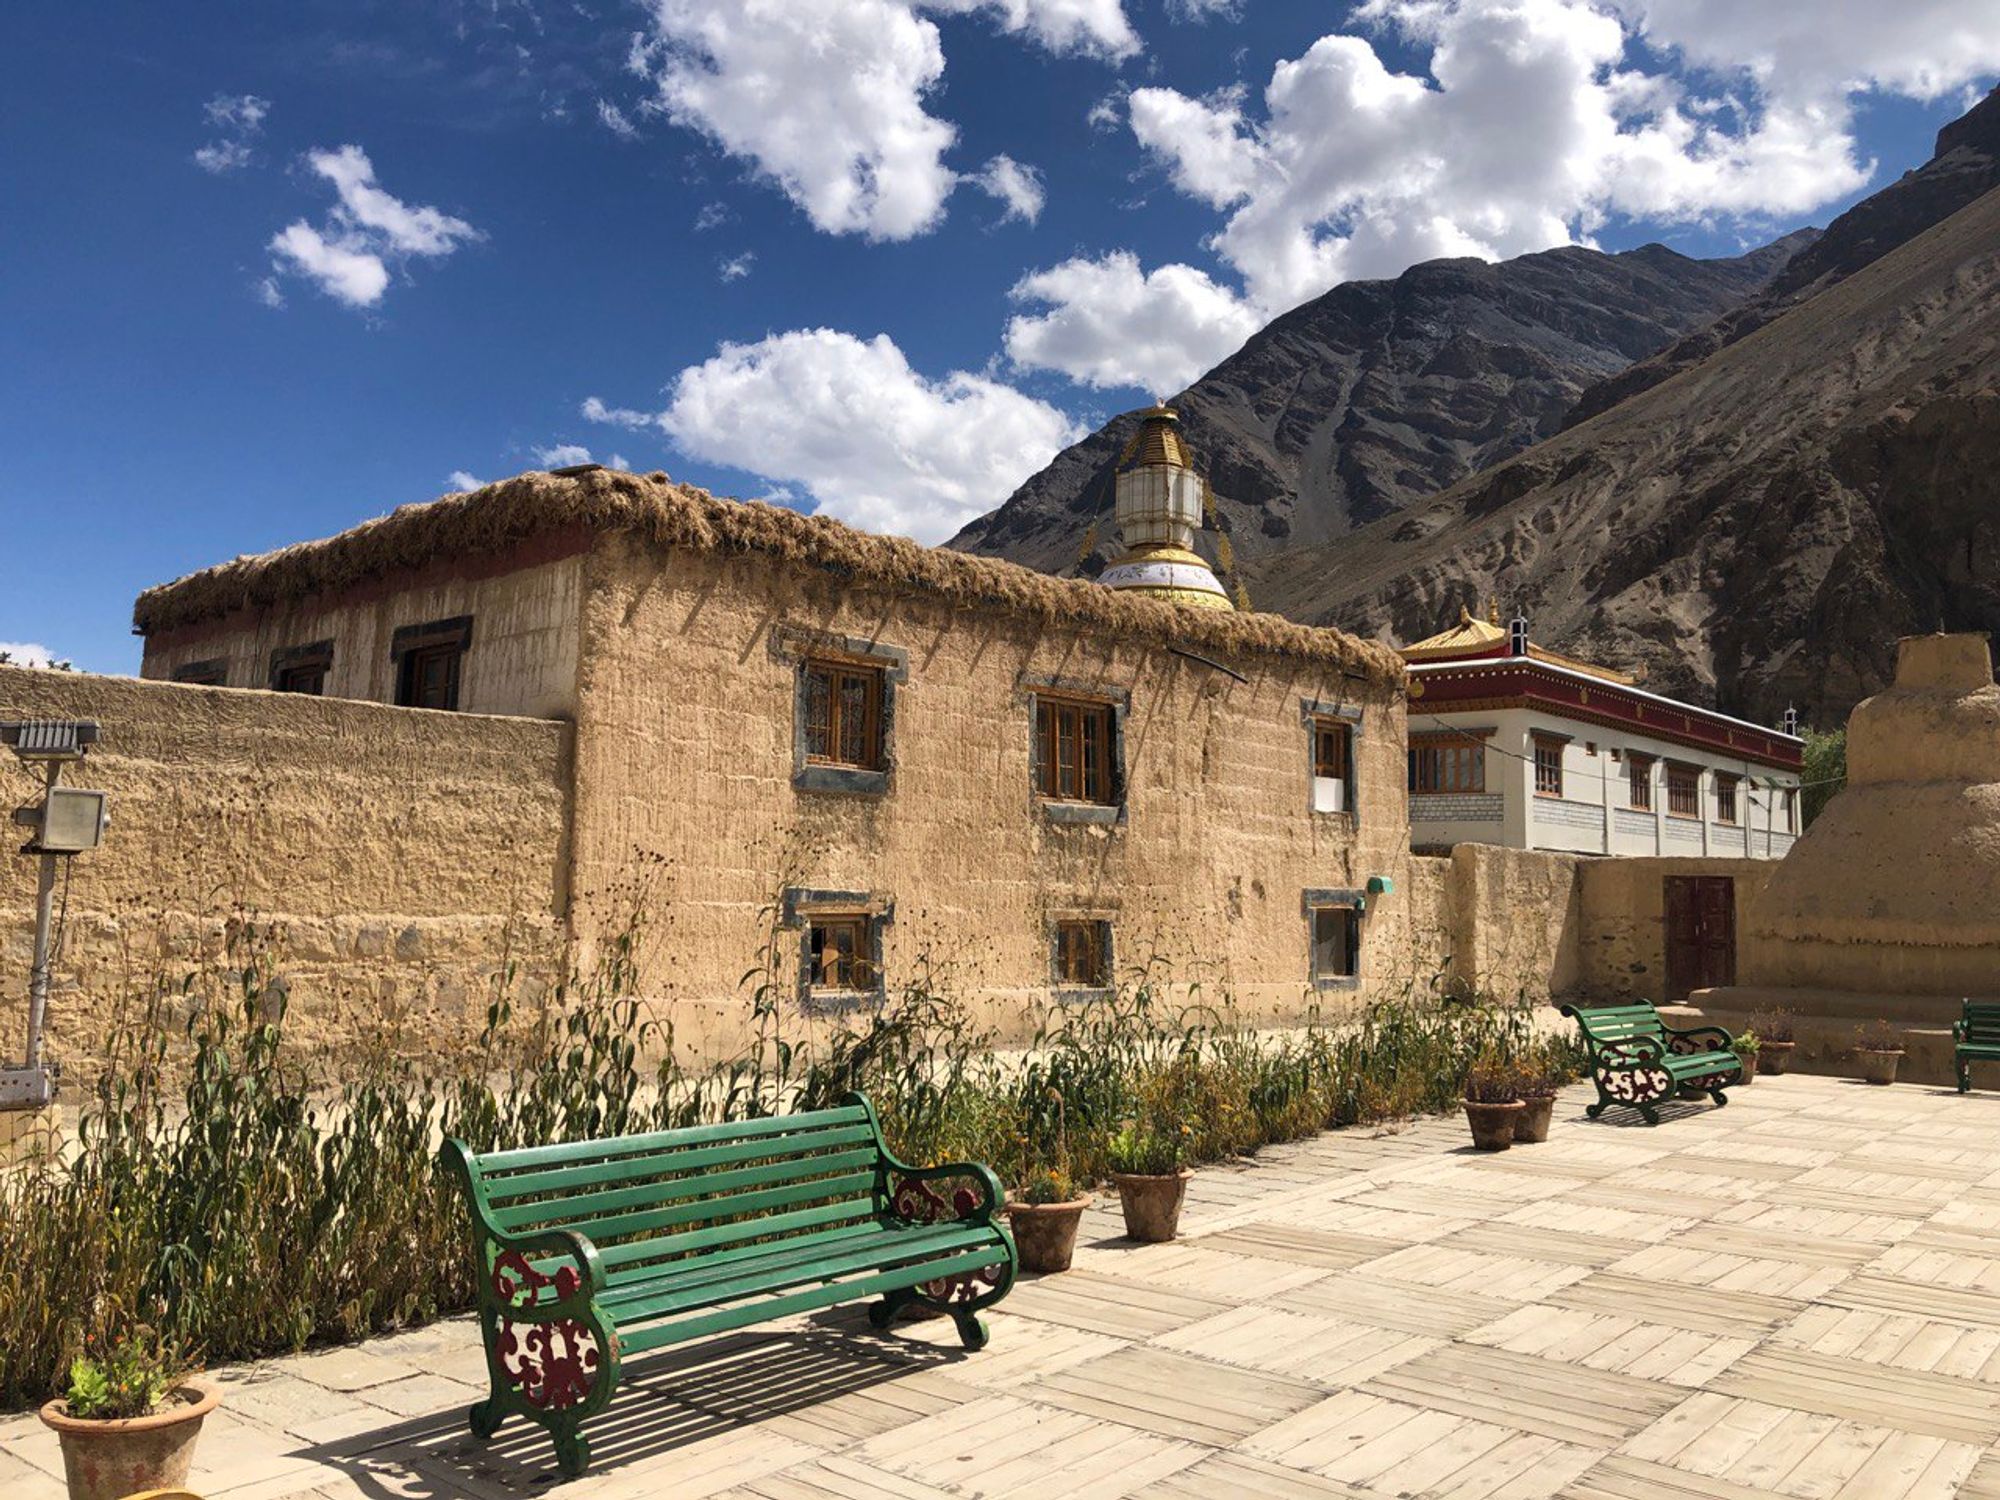 Tabo monastery